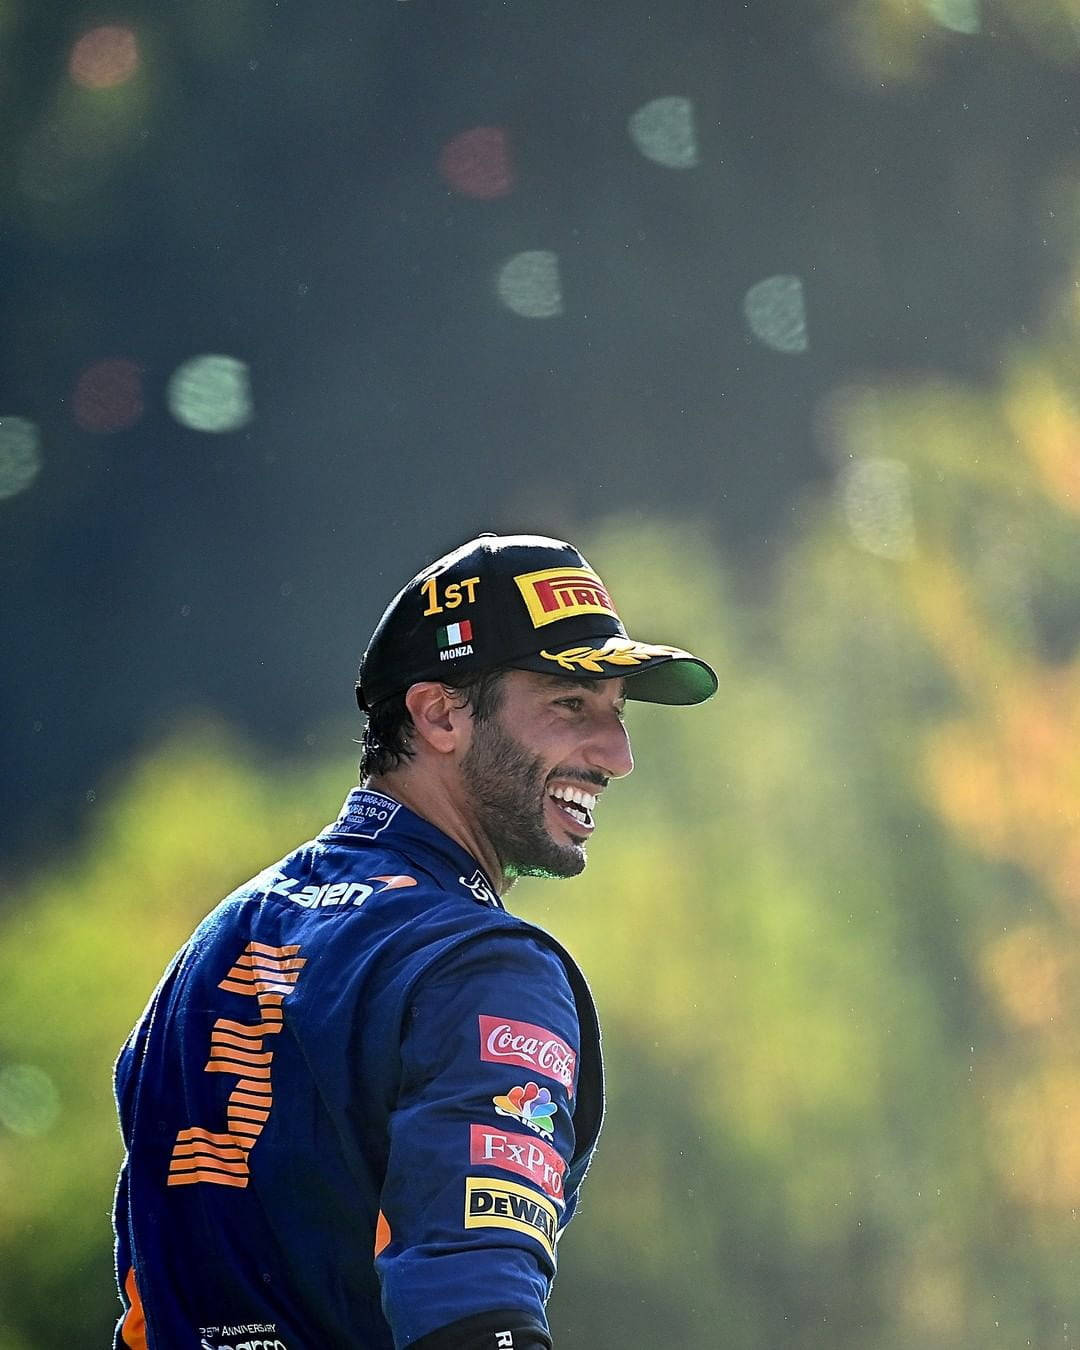 Daniel Ricciardo kigger på siden af sin racebil. Wallpaper